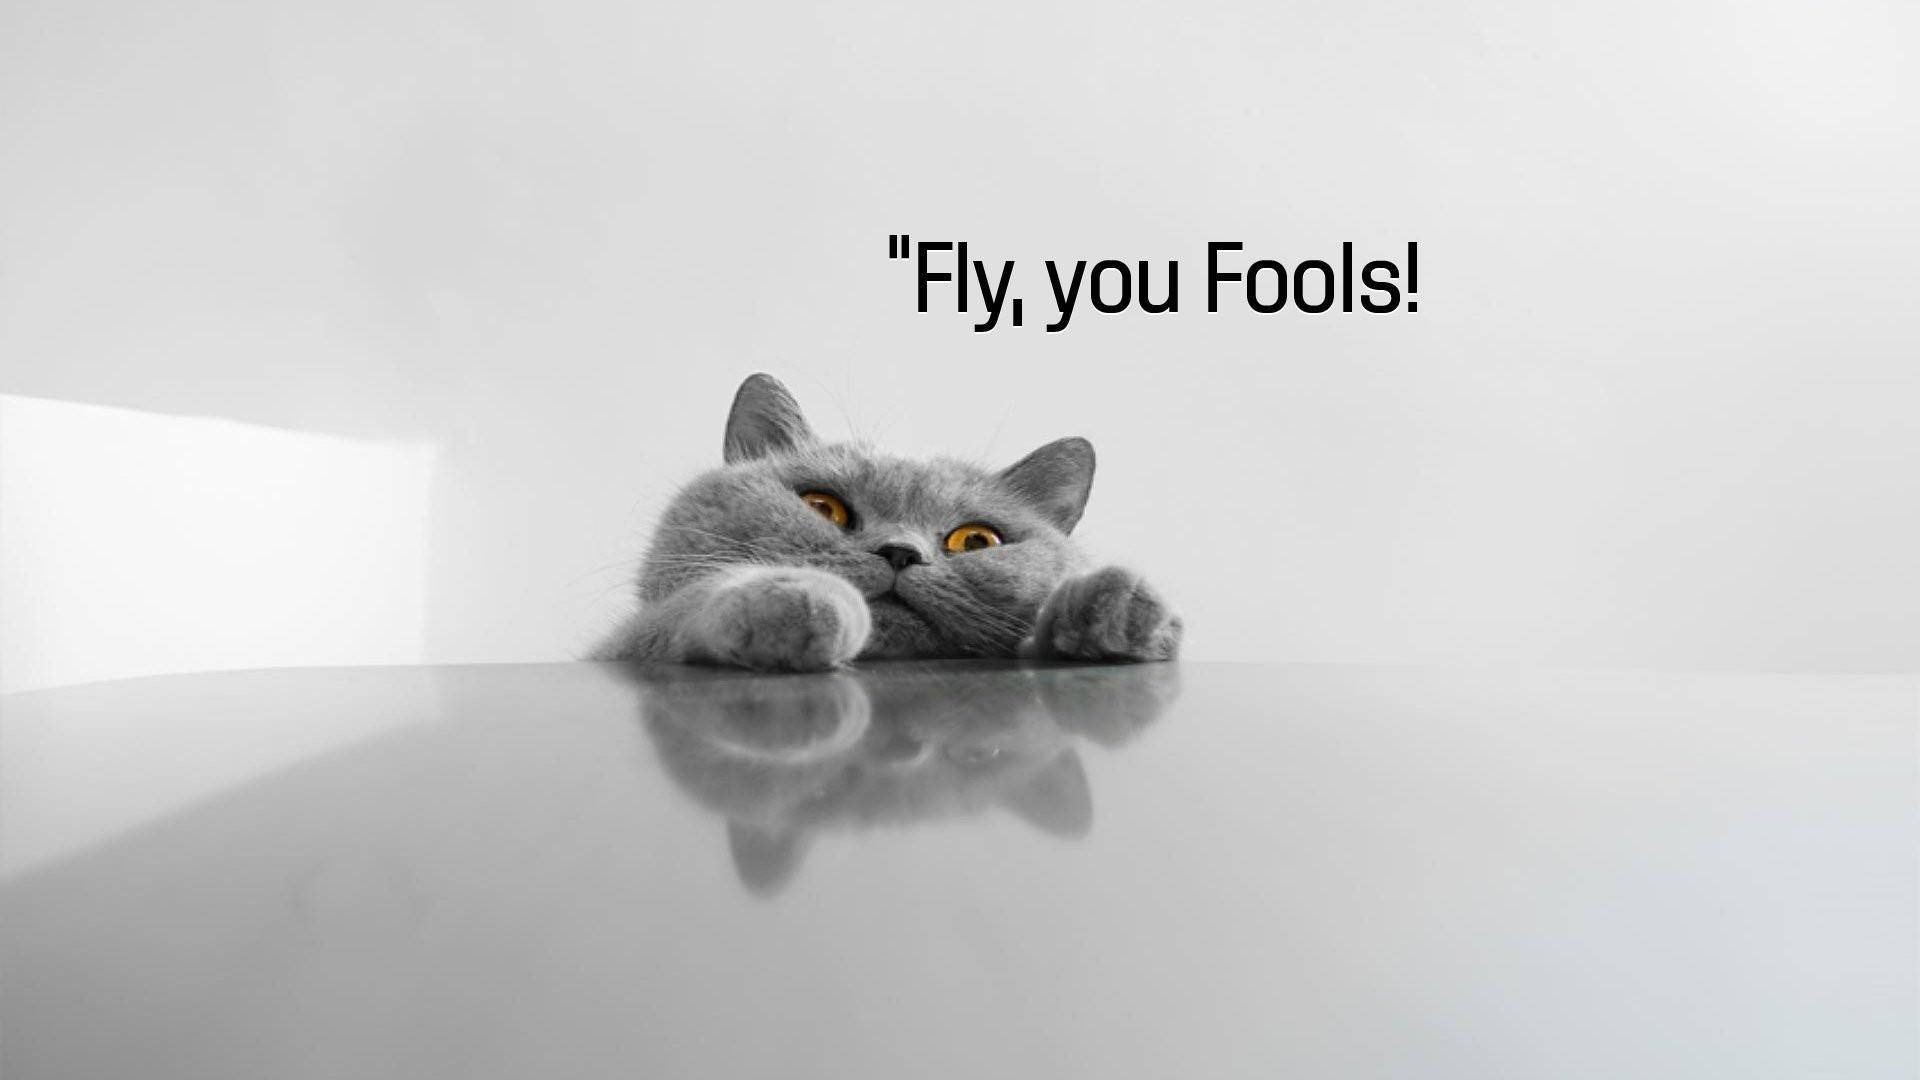 Fluffy grey cat meme wallpaper.